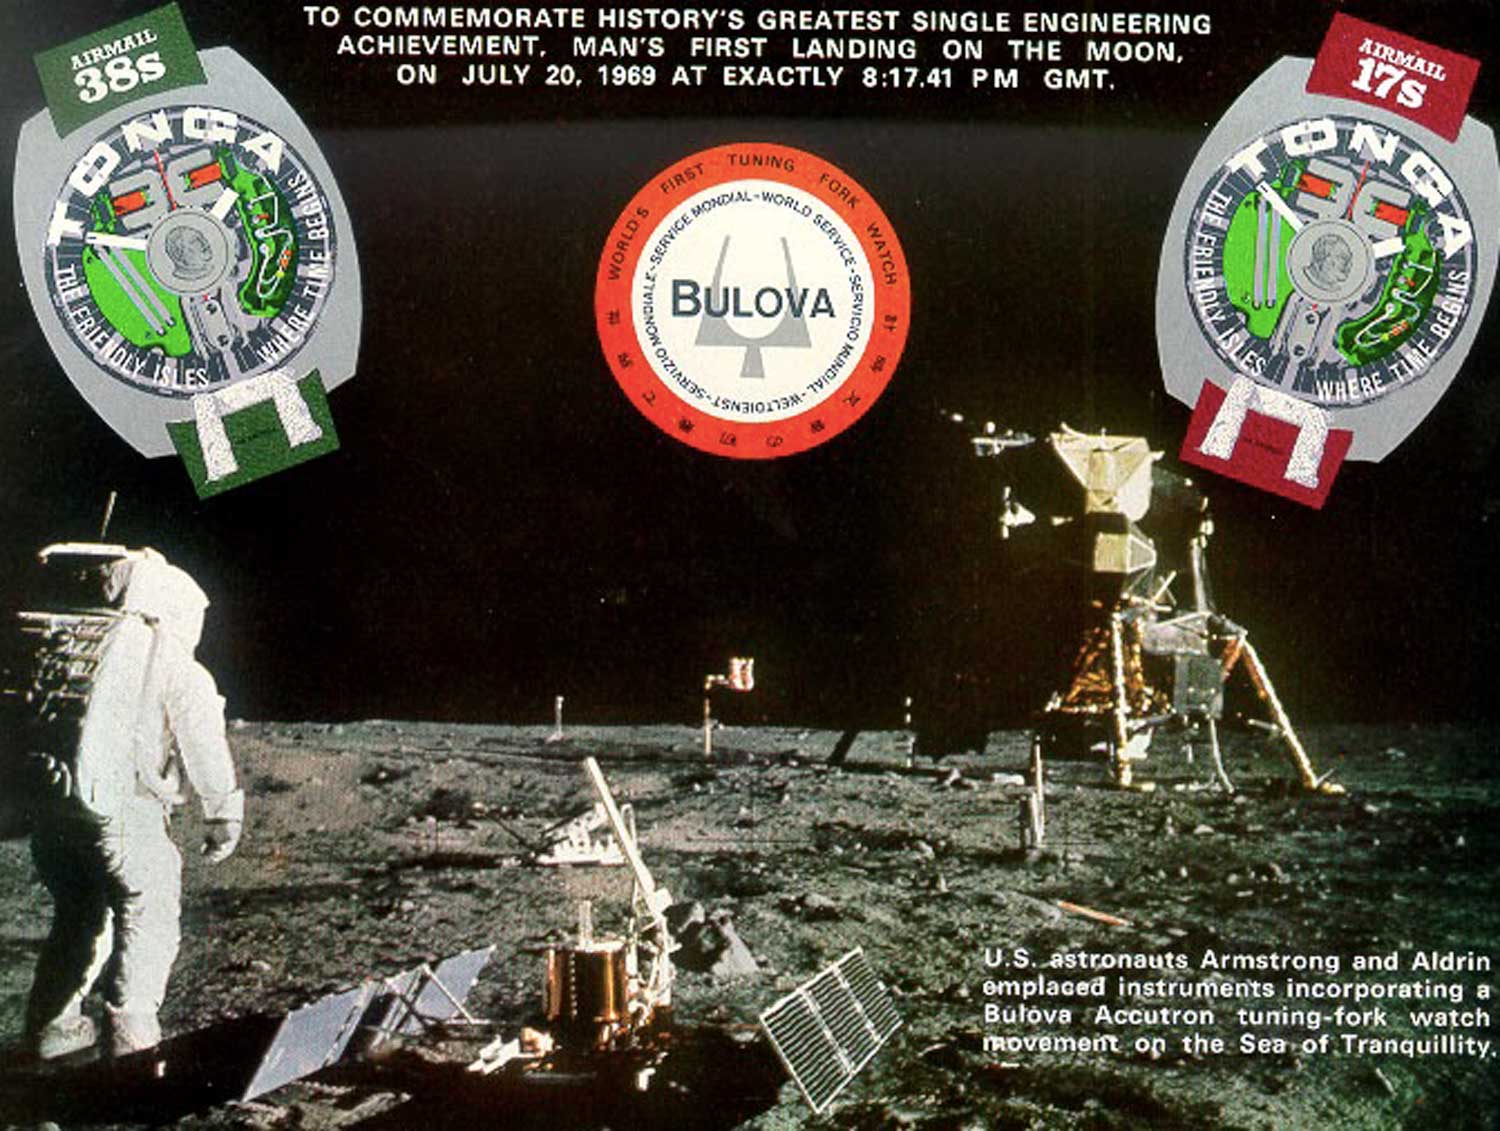 During the Apollo era, NASA approached Bulova to employ its remarkable Accutron accuracy to design a Lunar Pilot watch